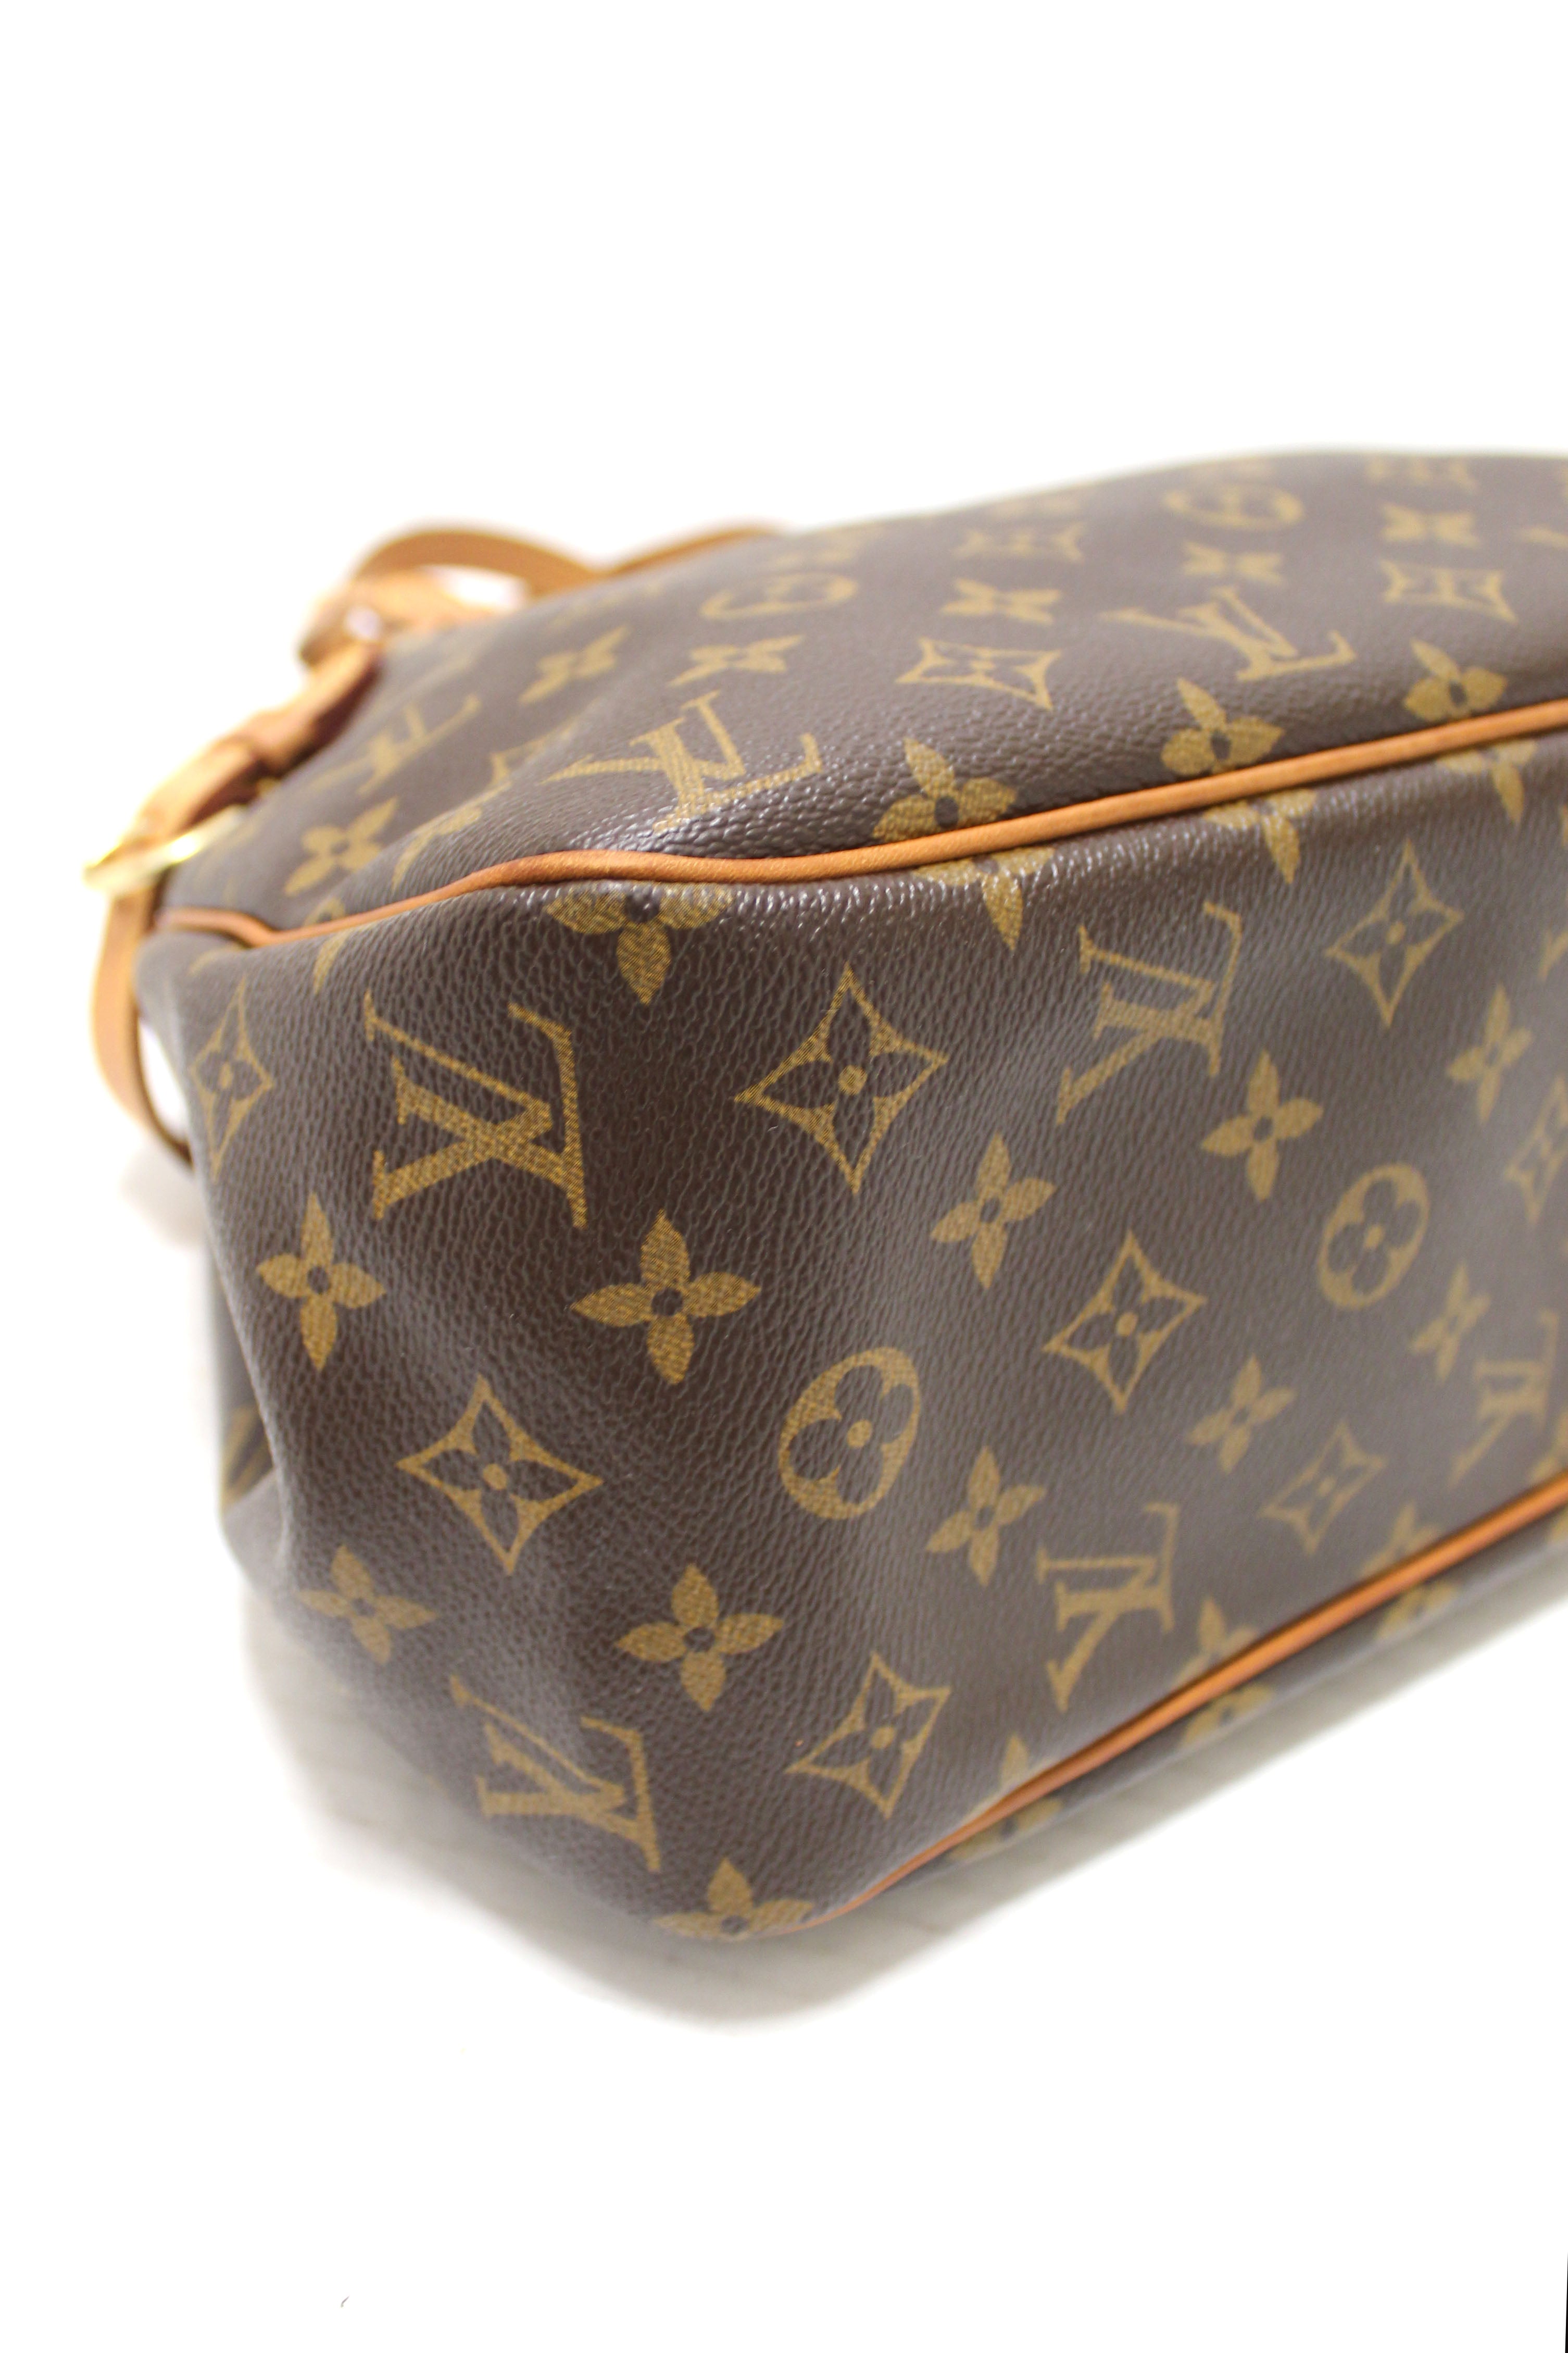 Louis Vuitton Classic Monogram Batignolles Tote Shoulder Bag